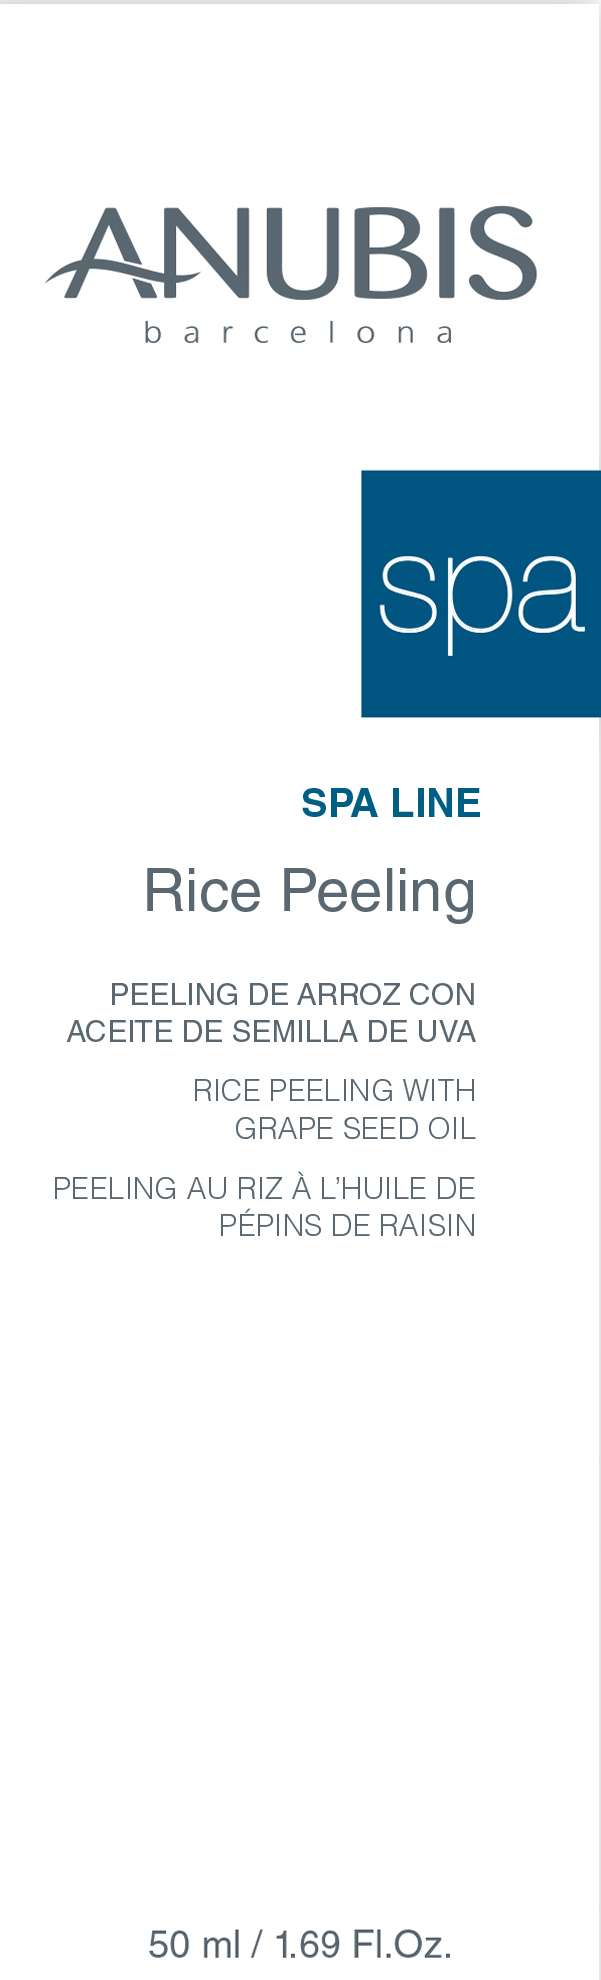 Rice peeling display